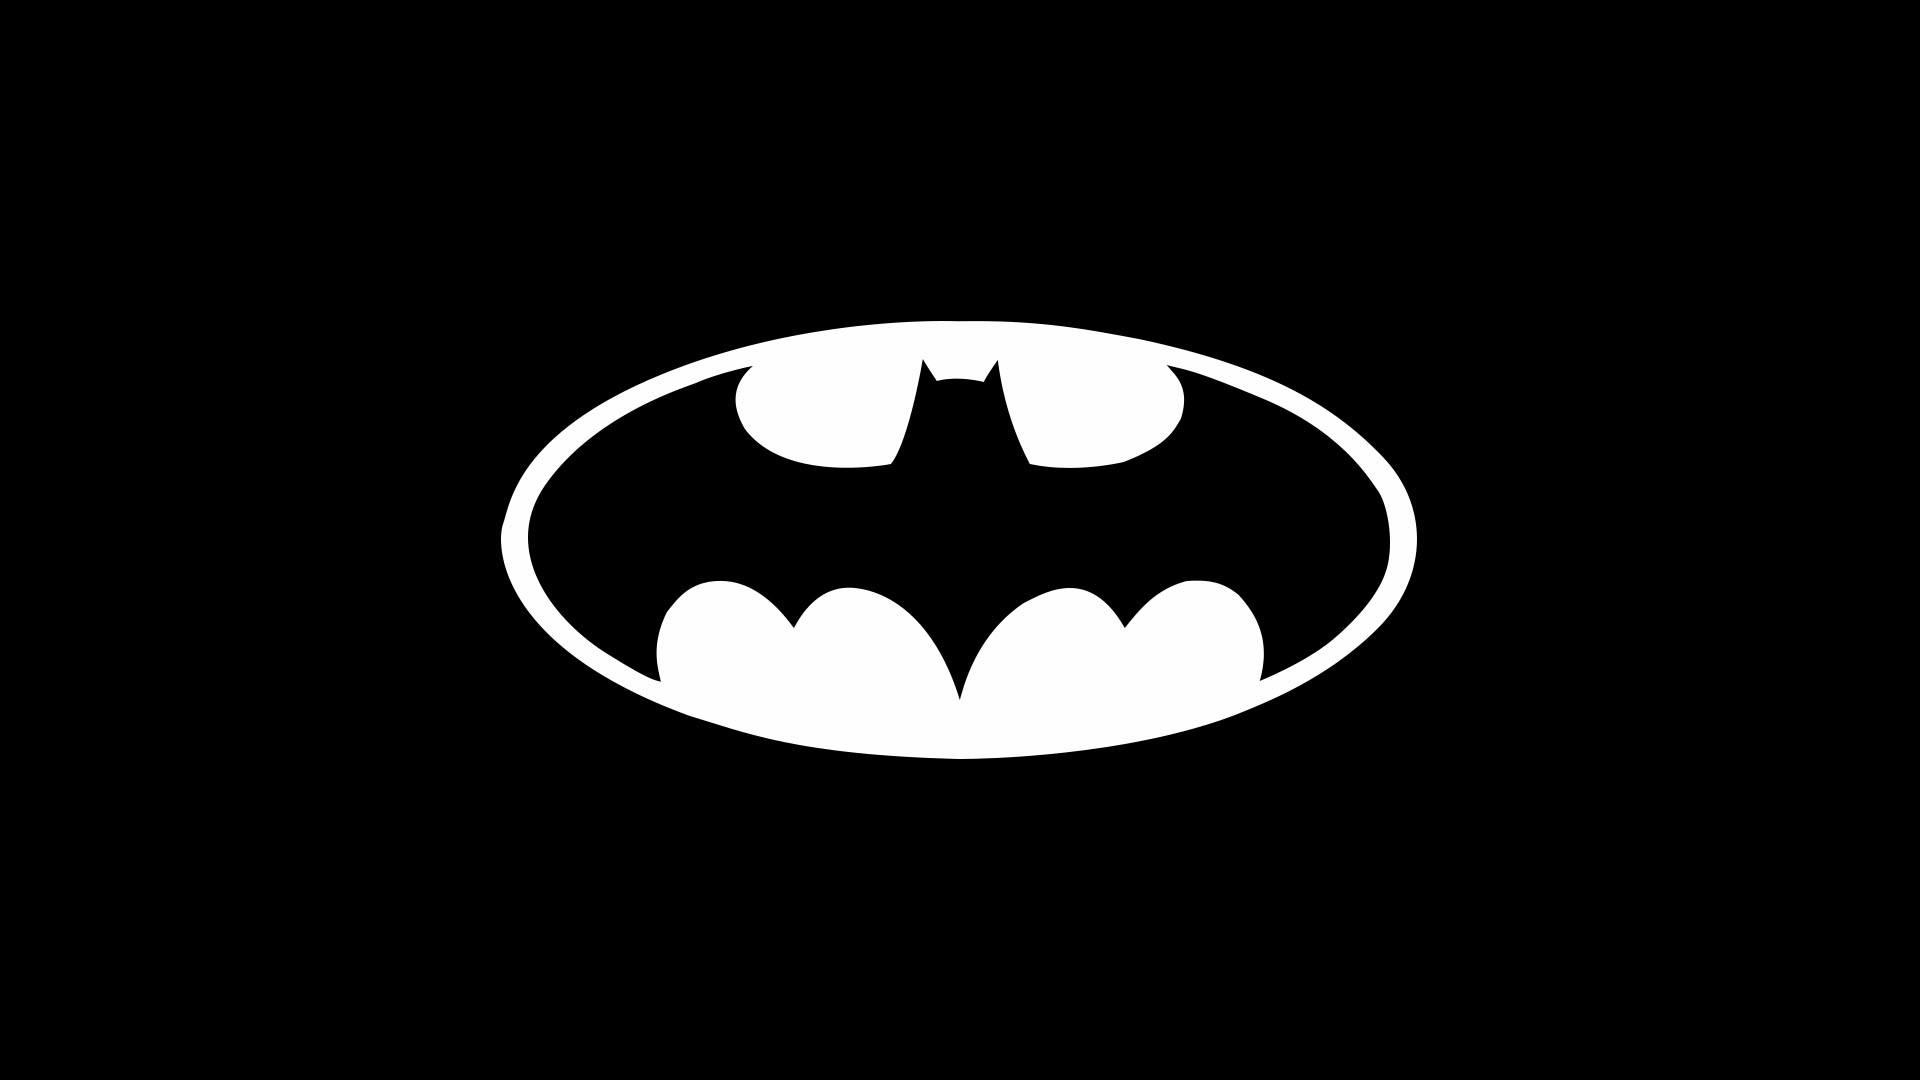 General 1920x1080 Batman logo Batman monochrome simple background superhero